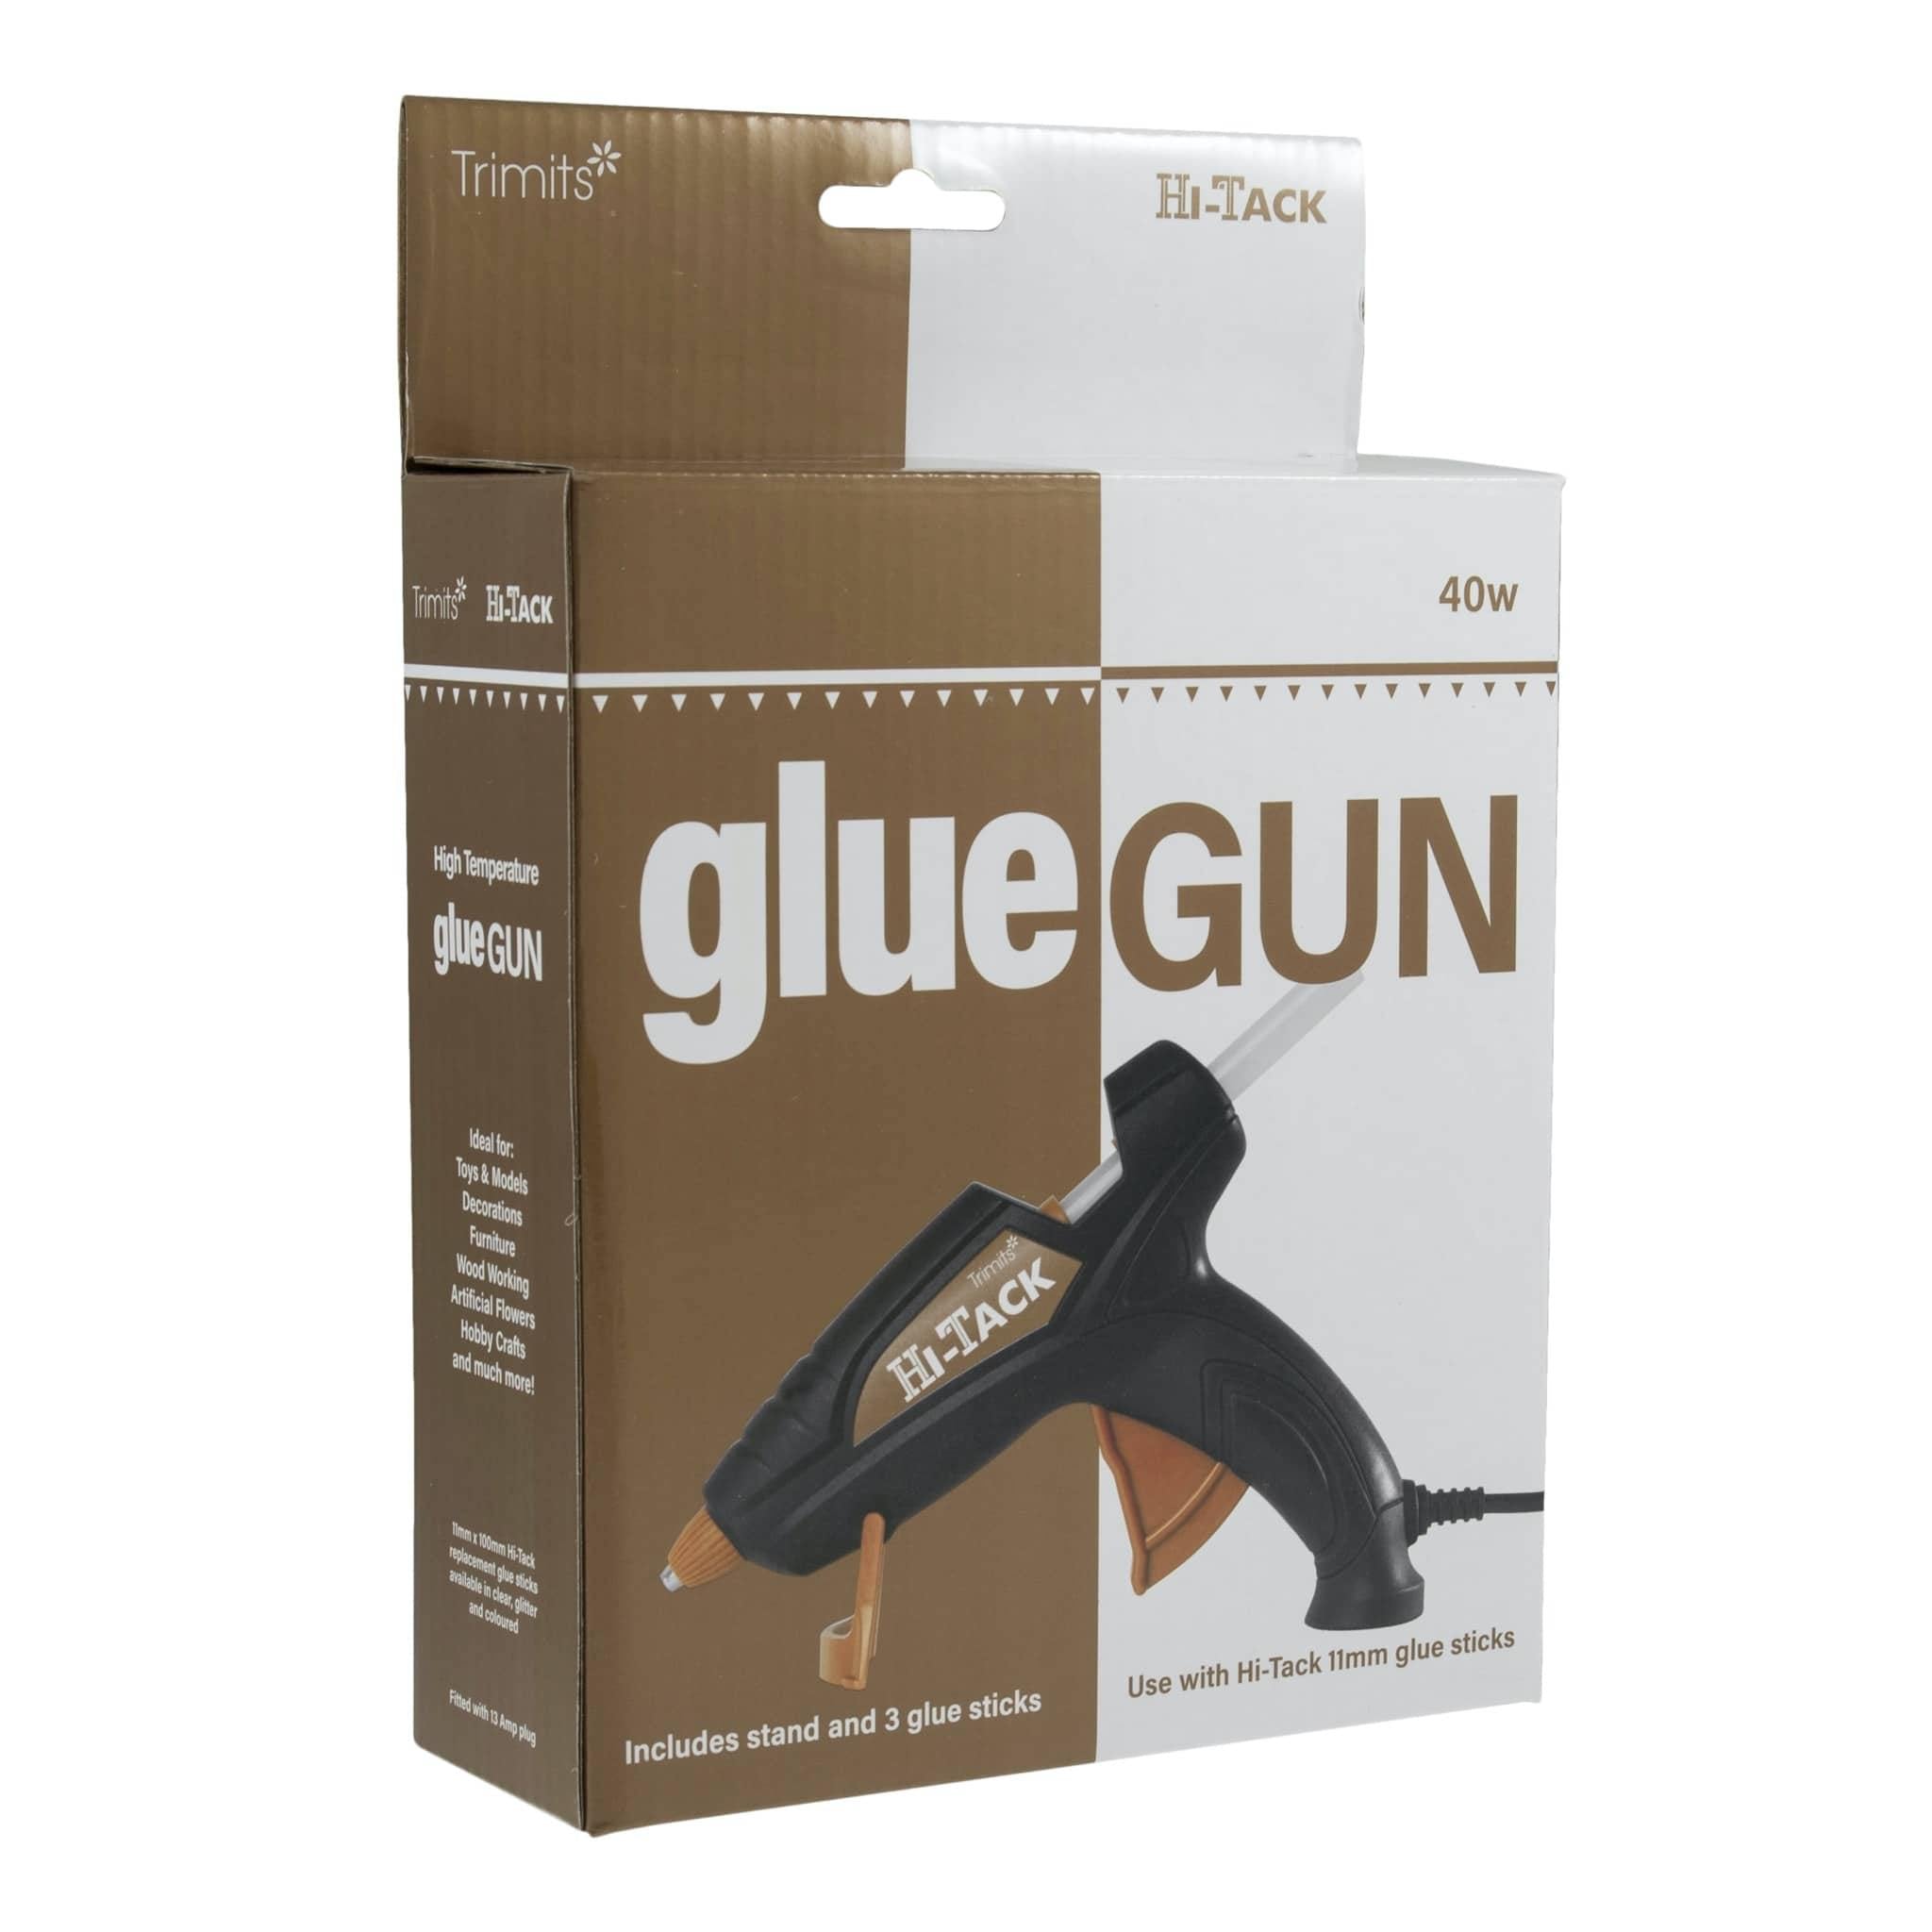 Hi-Tack Glue Gun Large 40w